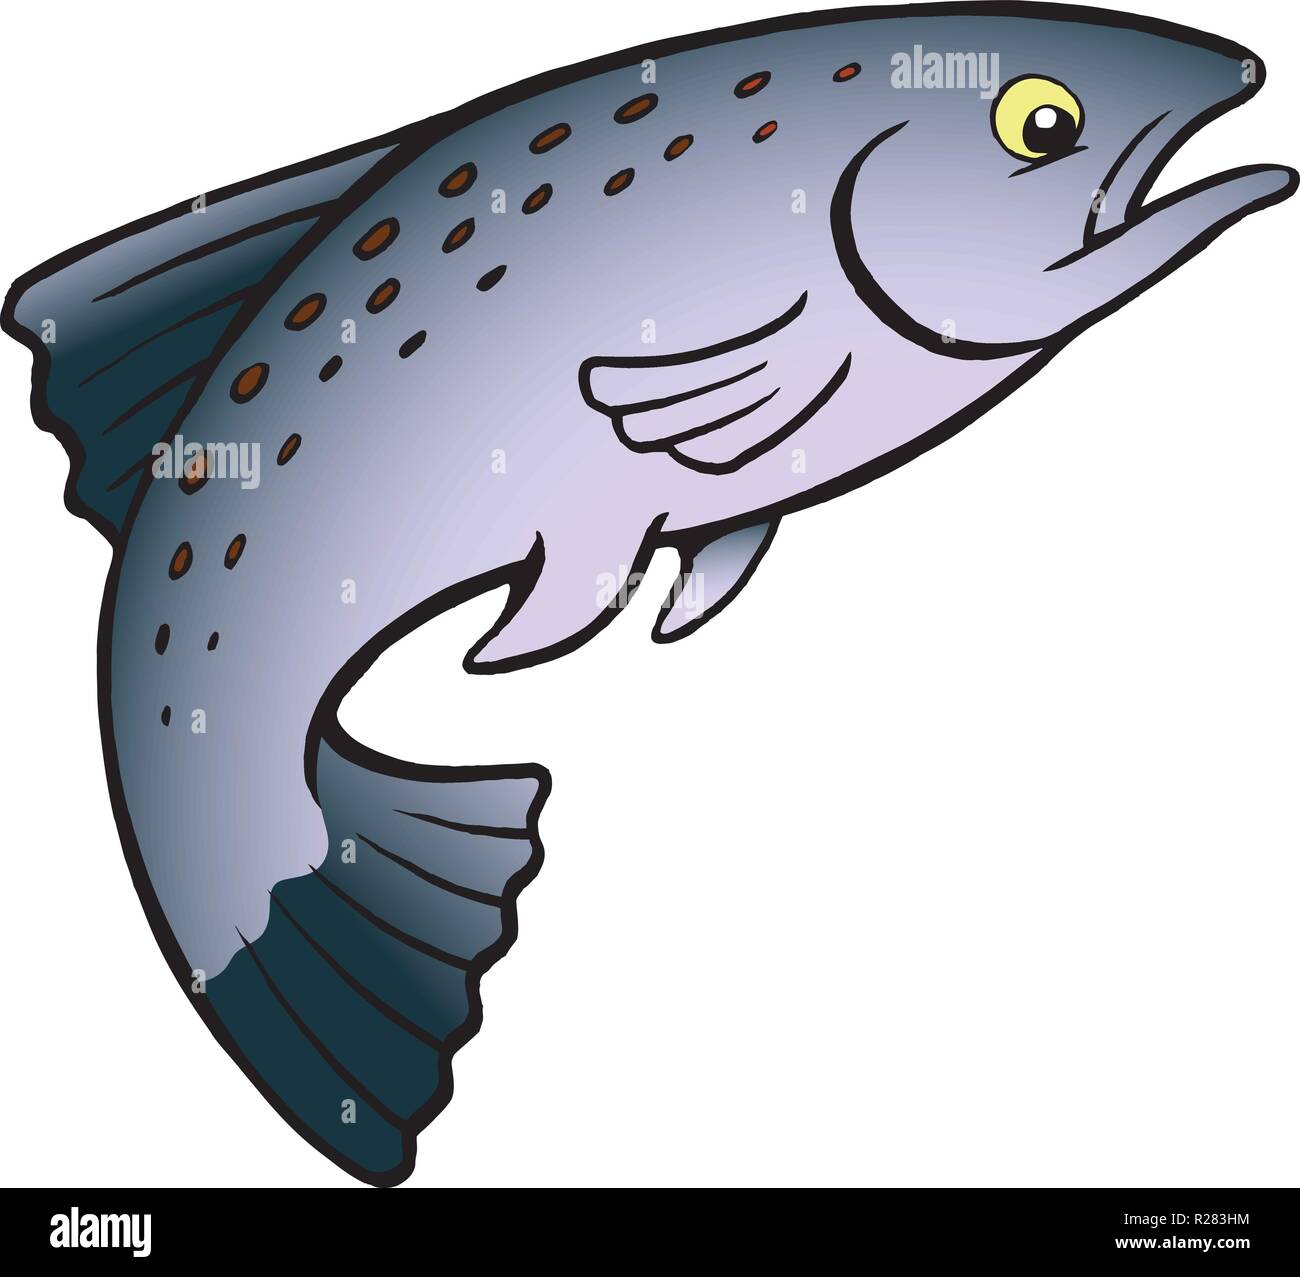 Ilustración vectorial de dibujos animados de un salmón o pescado trucha  Imagen Vector de stock - Alamy